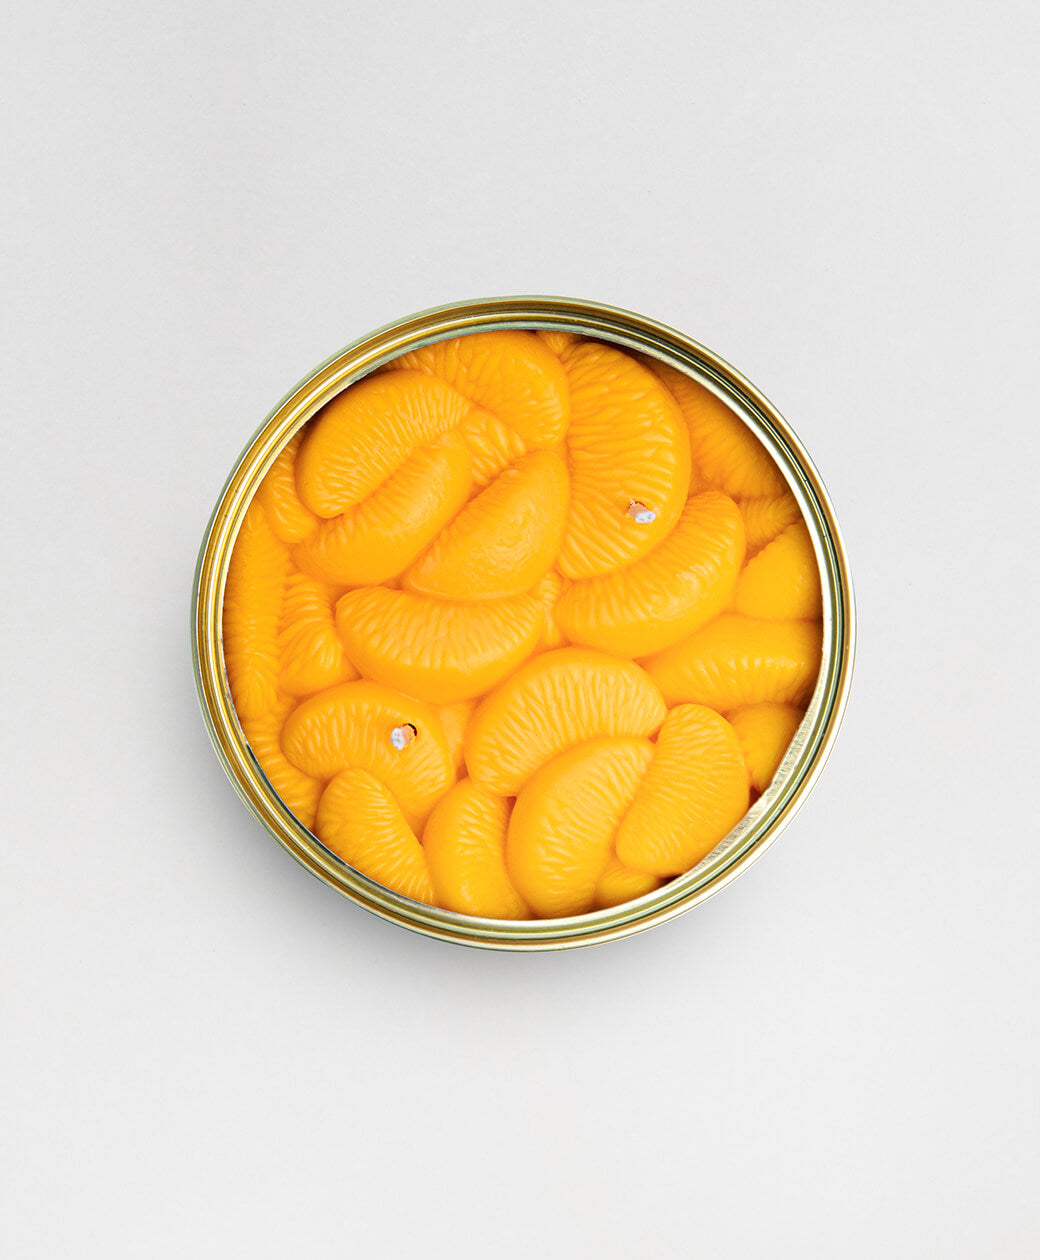 vela vegetal numa lata de conserva com aspecto e aroma a tangerina